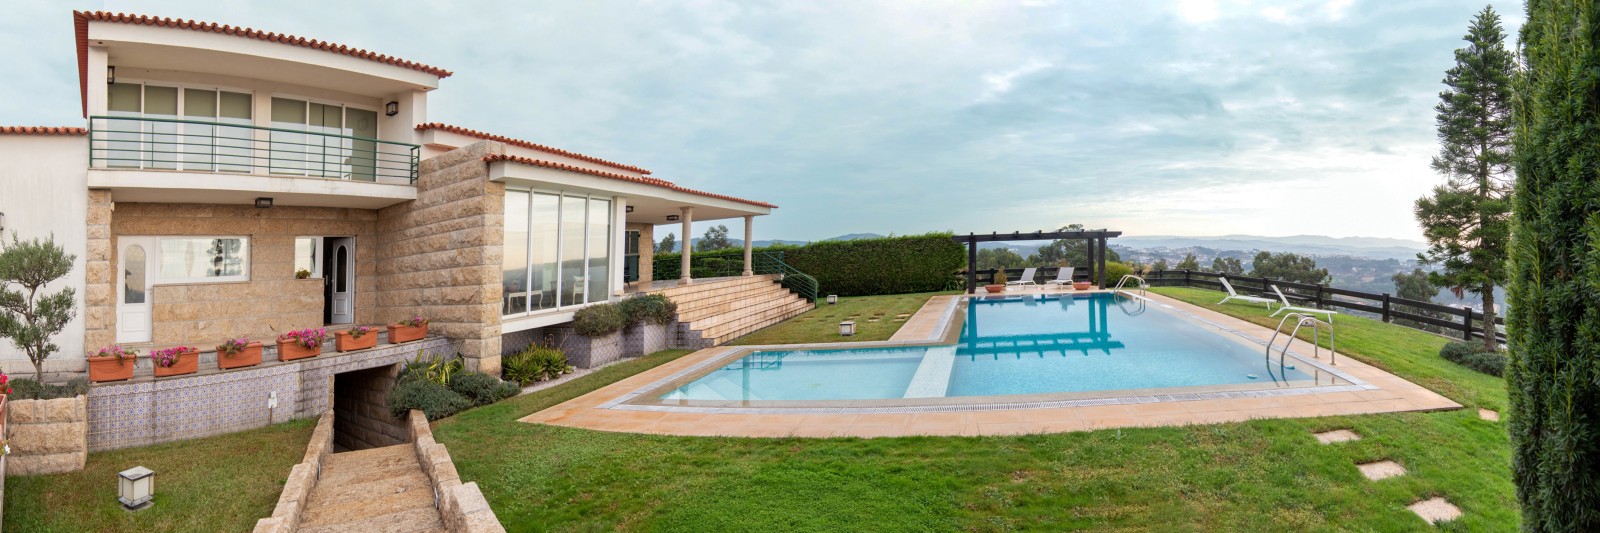 Villa de 6 chambres avec piscine, à vendre, à Lousada, Portugal_248967